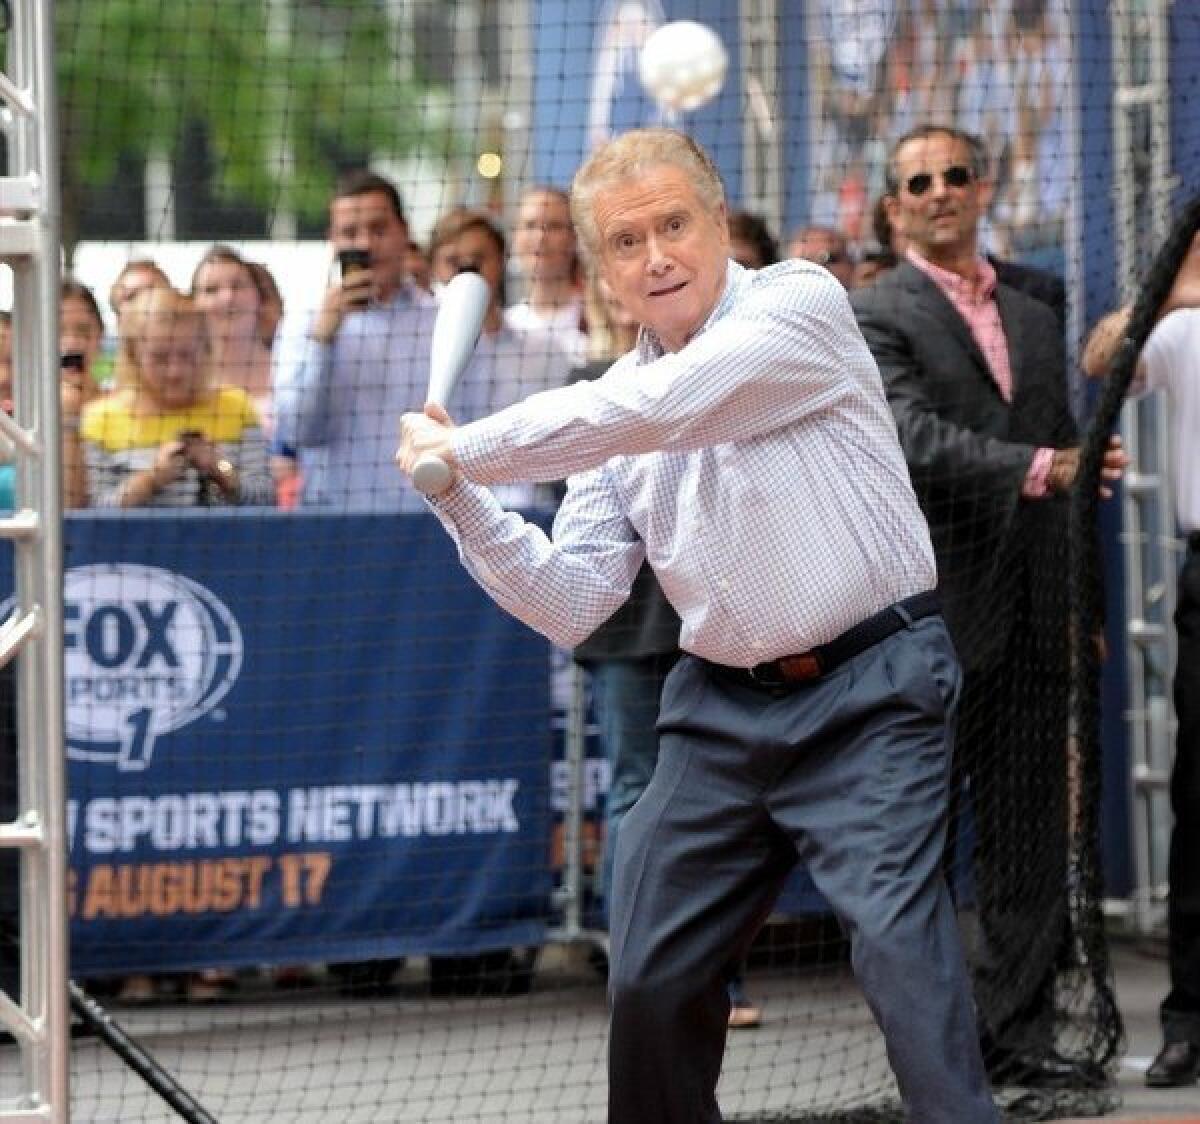 Regis Philbin will host a show on Fox Sports 1.